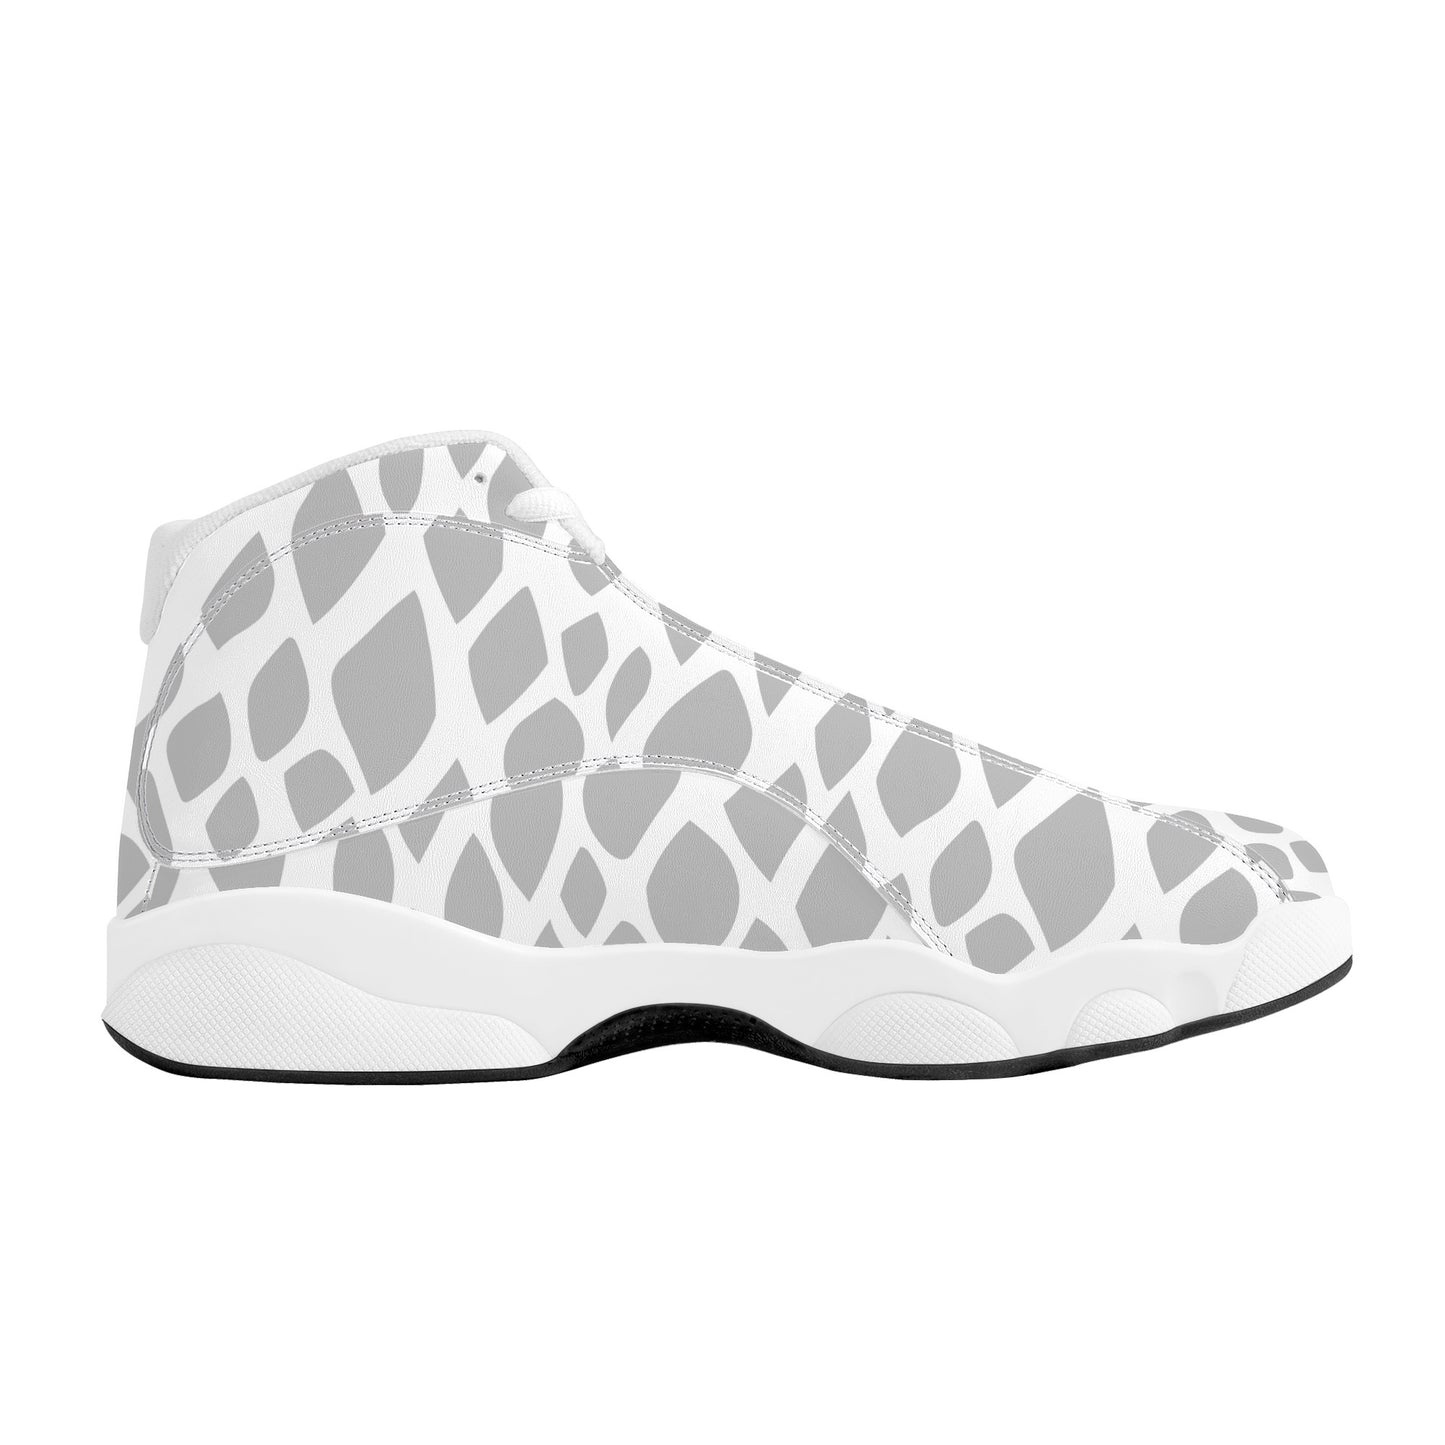 "Nix Snake" Basketball Shoes